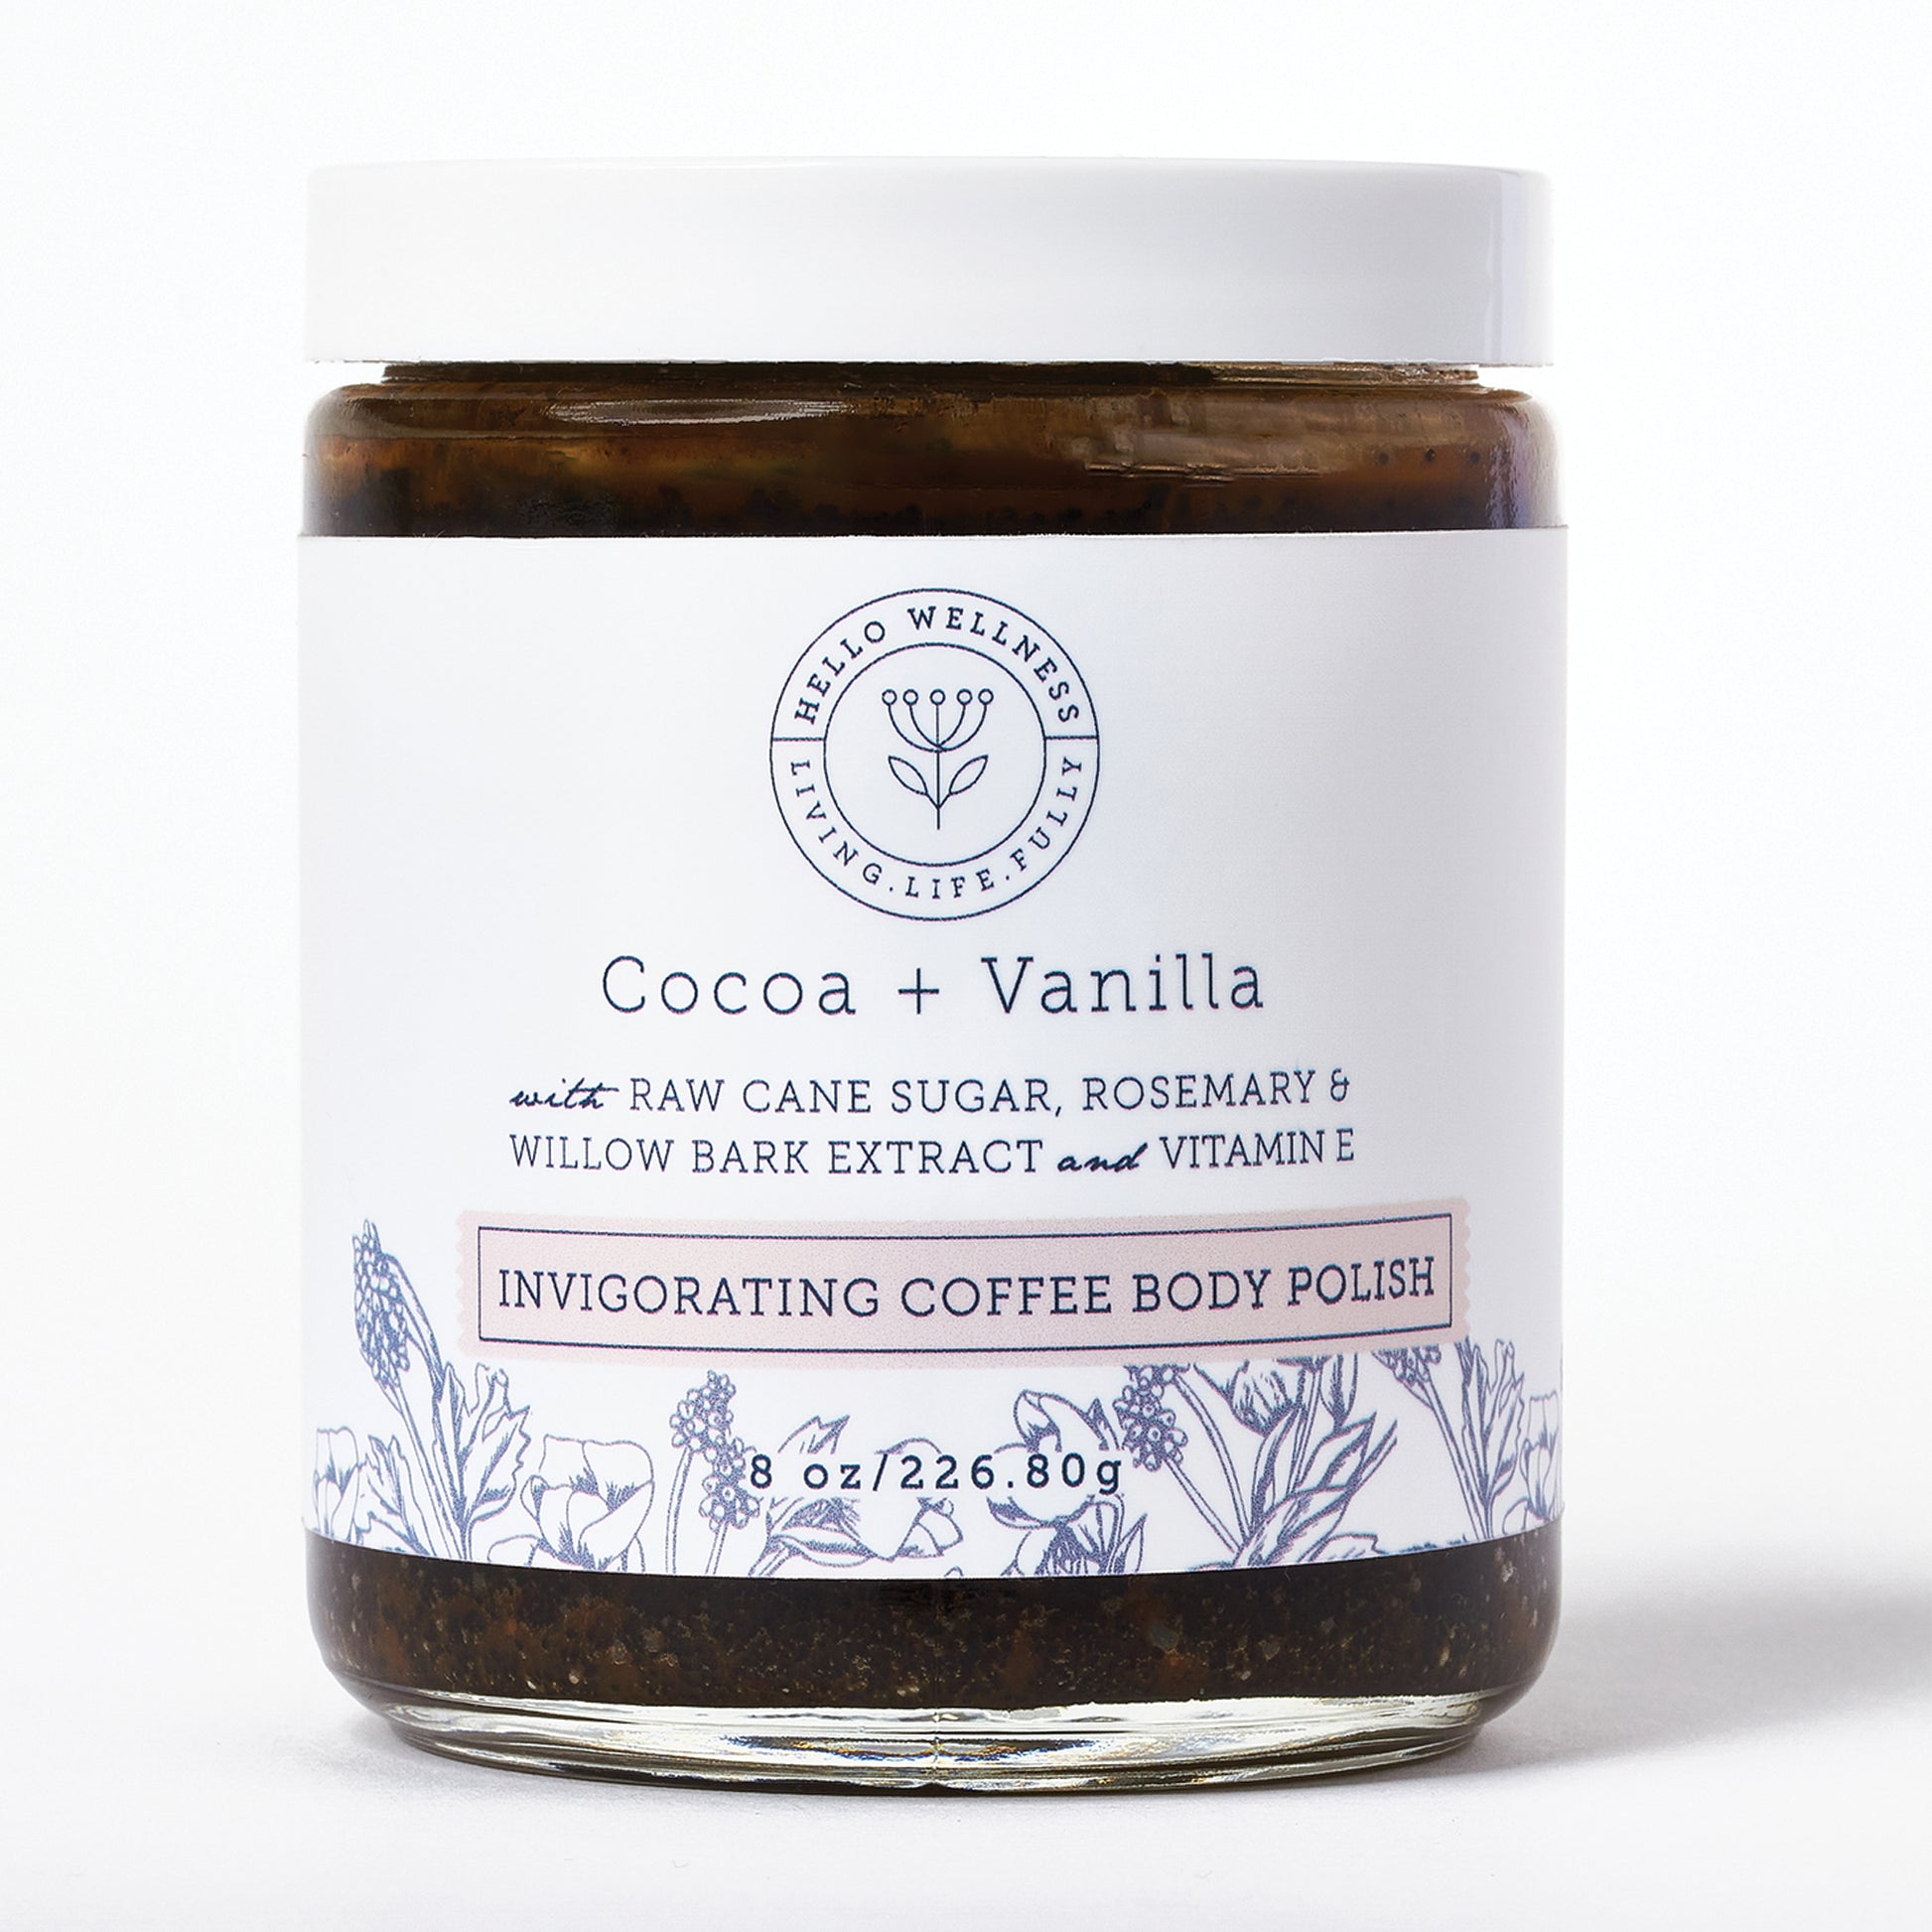 Cocoa + Vanilla Coffee Body Polish. Exfoliate & scrub away dry, rough skin, revealing soft, smooth, radiant, glowing skin.